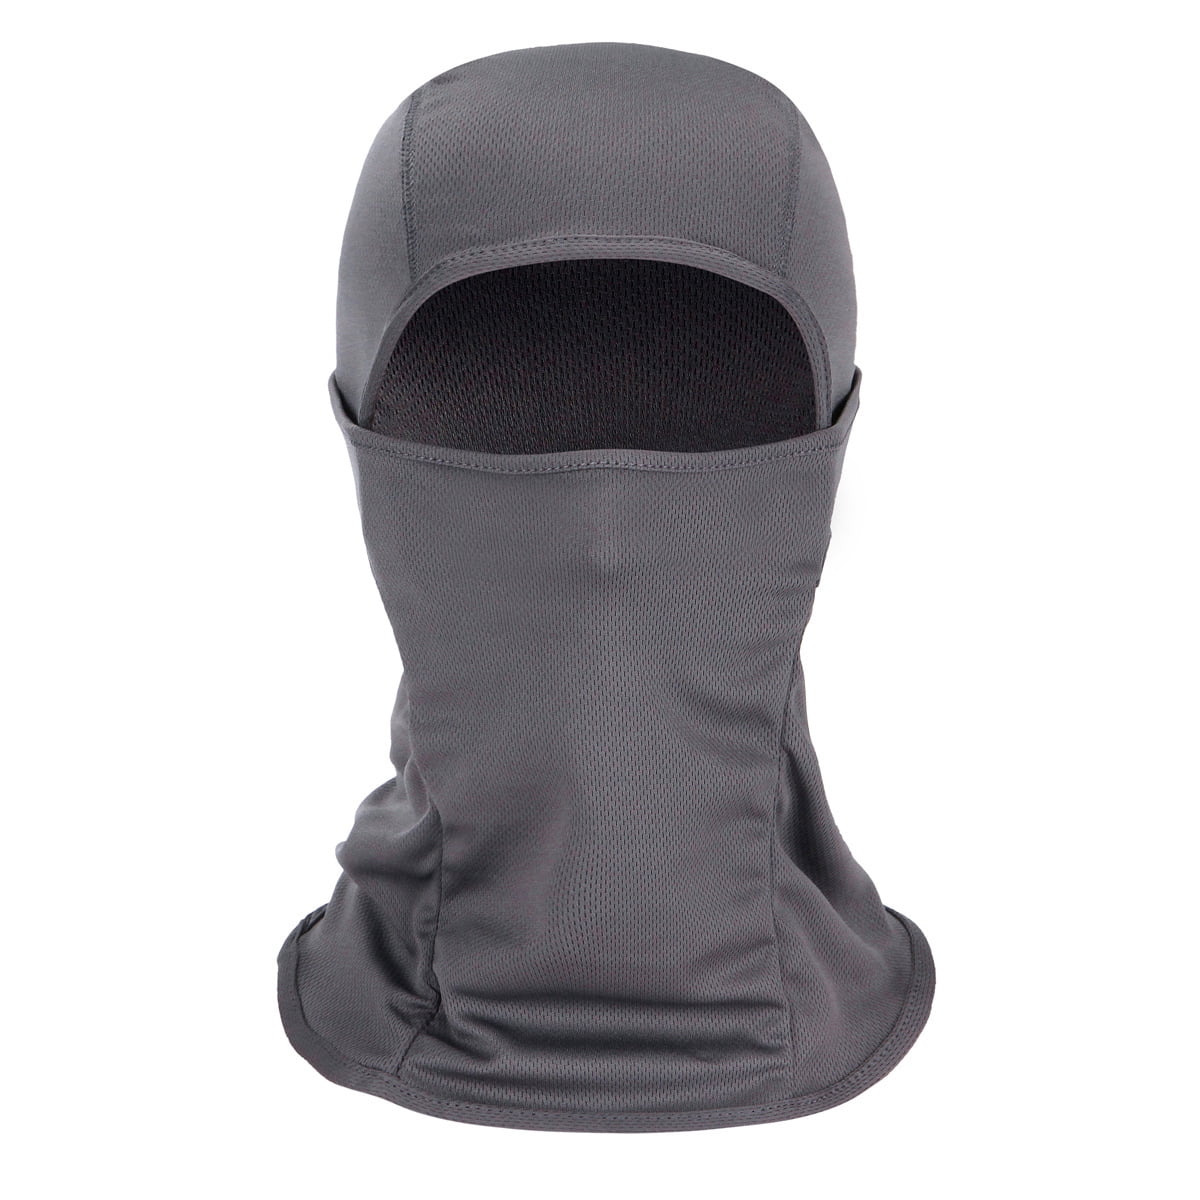 Balaclava Face Mask UV Protection Ski Sun Hood Tactical Mask for Men Women Black